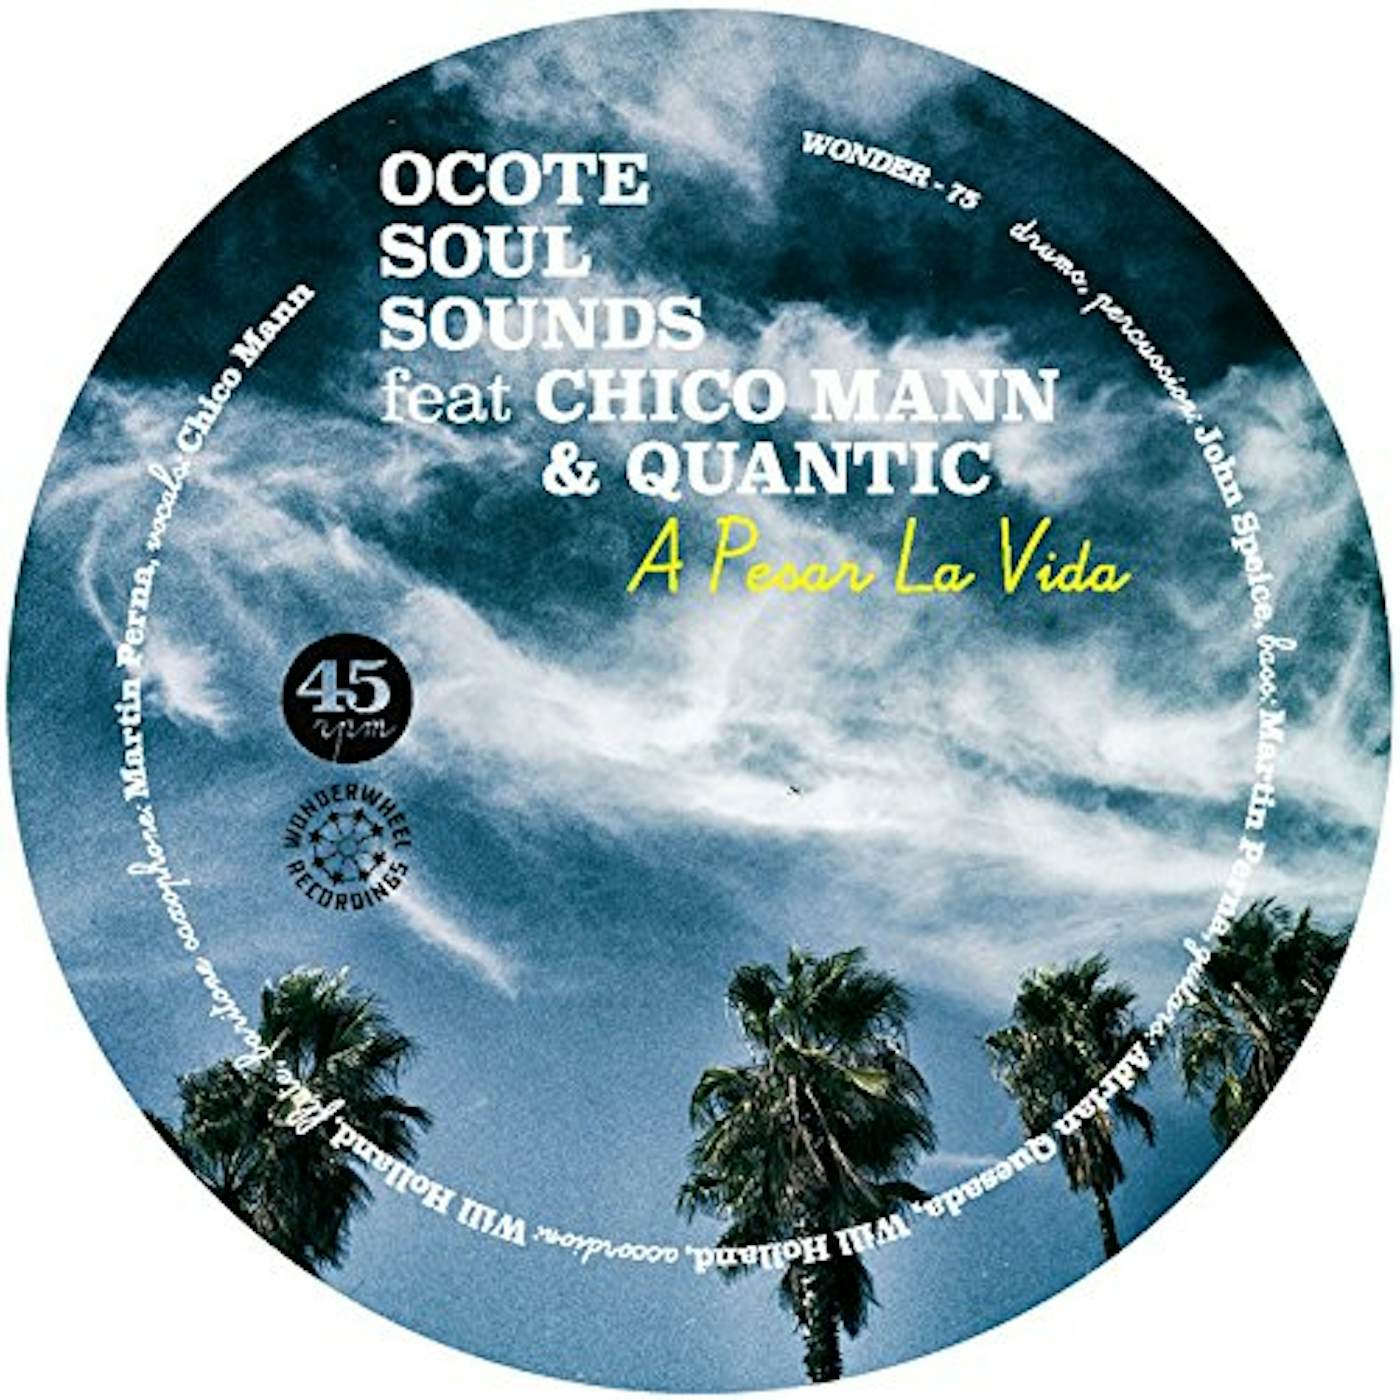 Ocote Soul Sounds PESAR LA VIDA / NOT YET Vinyl Record